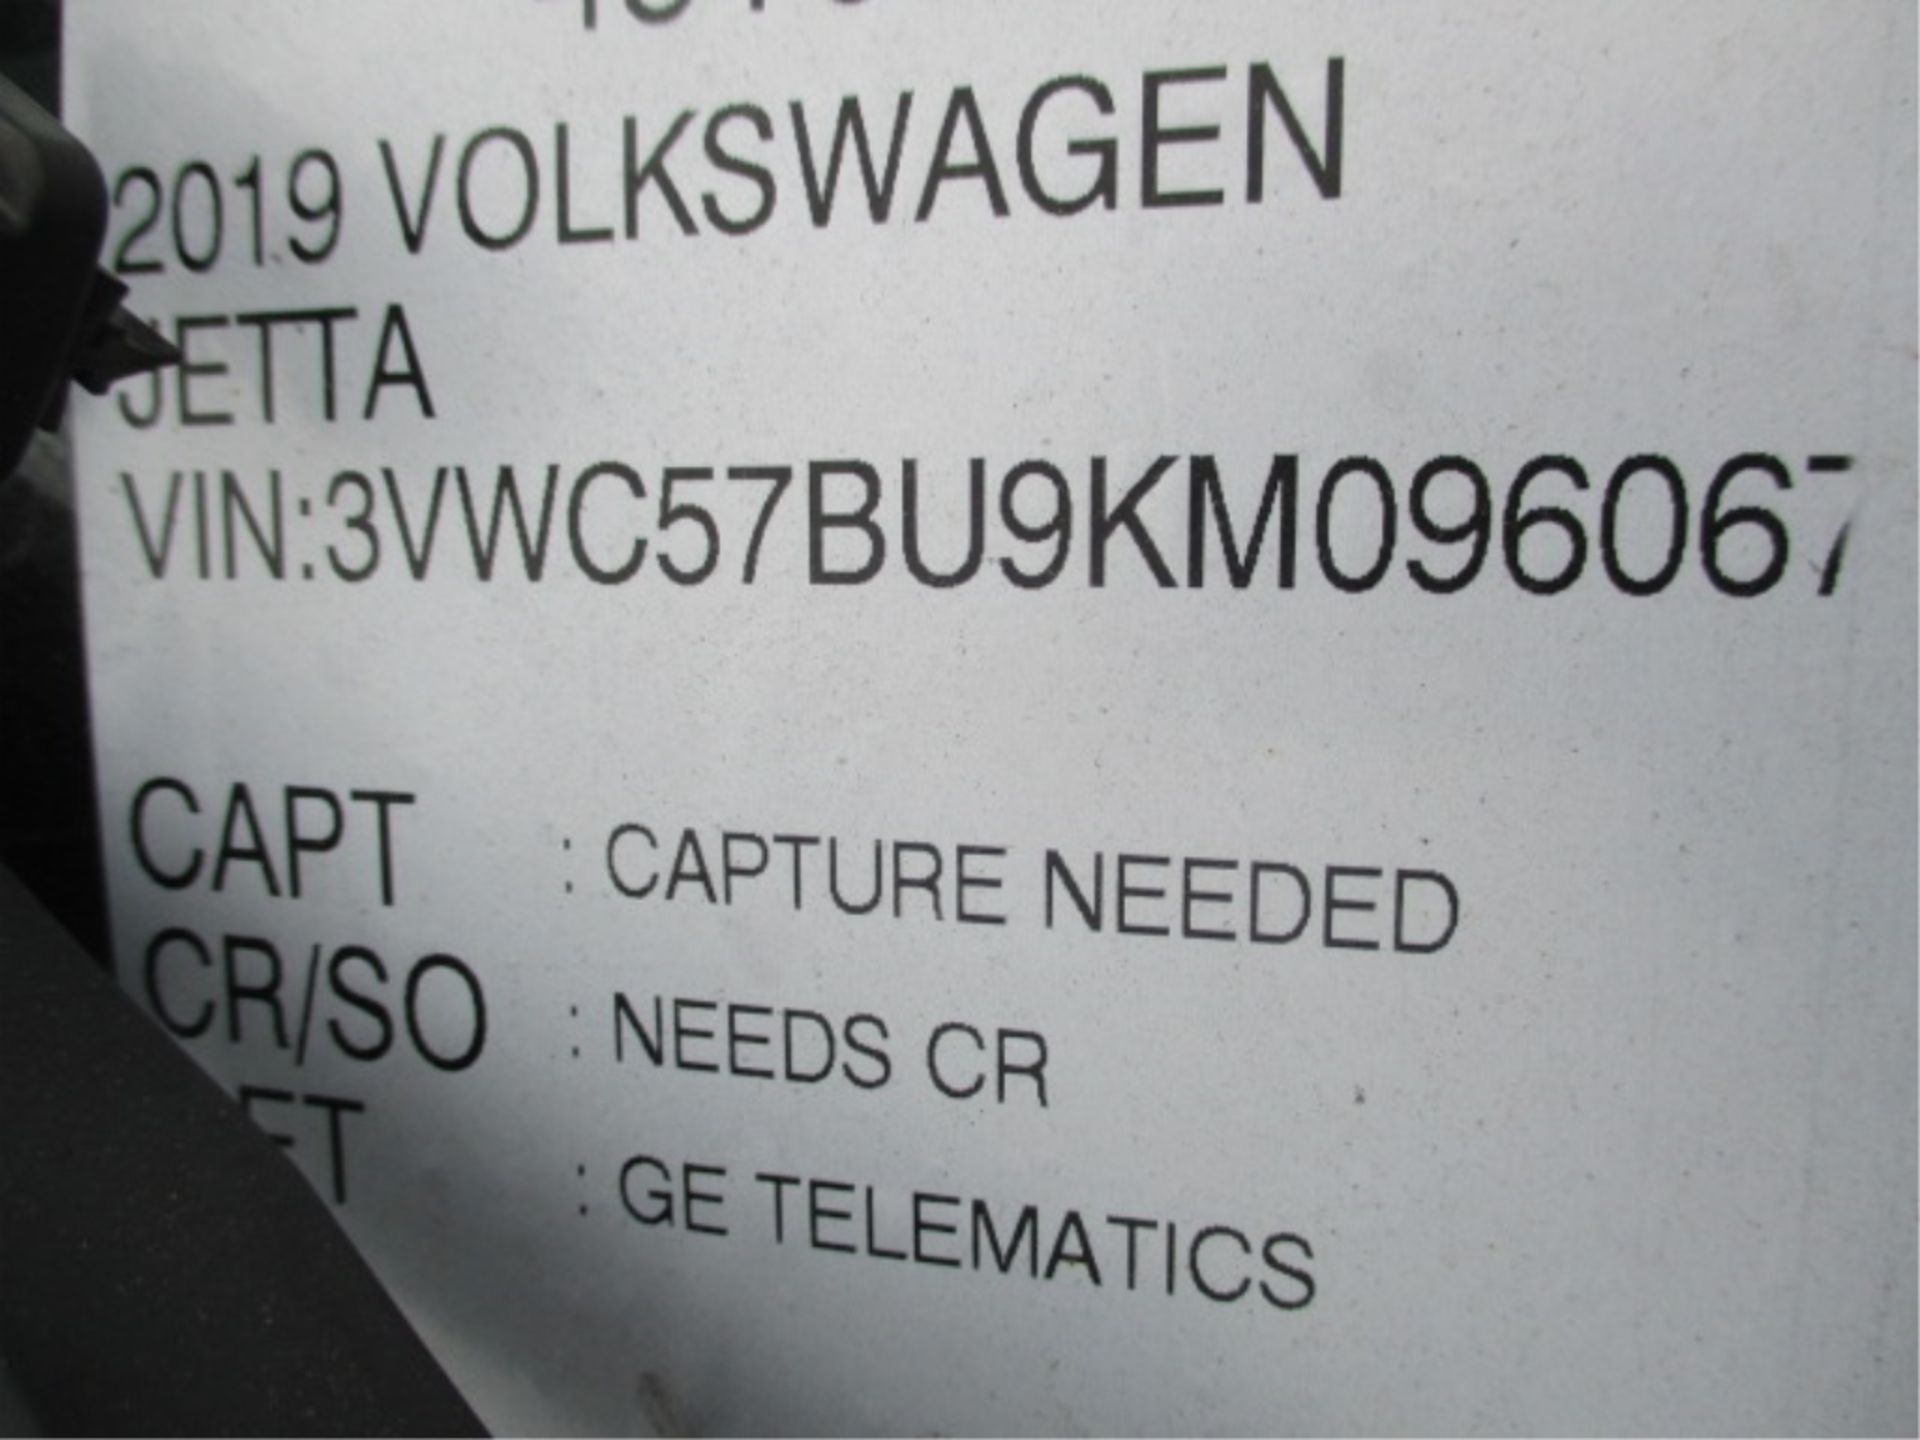 2019 Volkswagen Jetta Sedan, 1.4L Gas, Automatic, S/N: 3VWC57BU9KM096067, **Non-Operational**, ** - Image 36 of 36